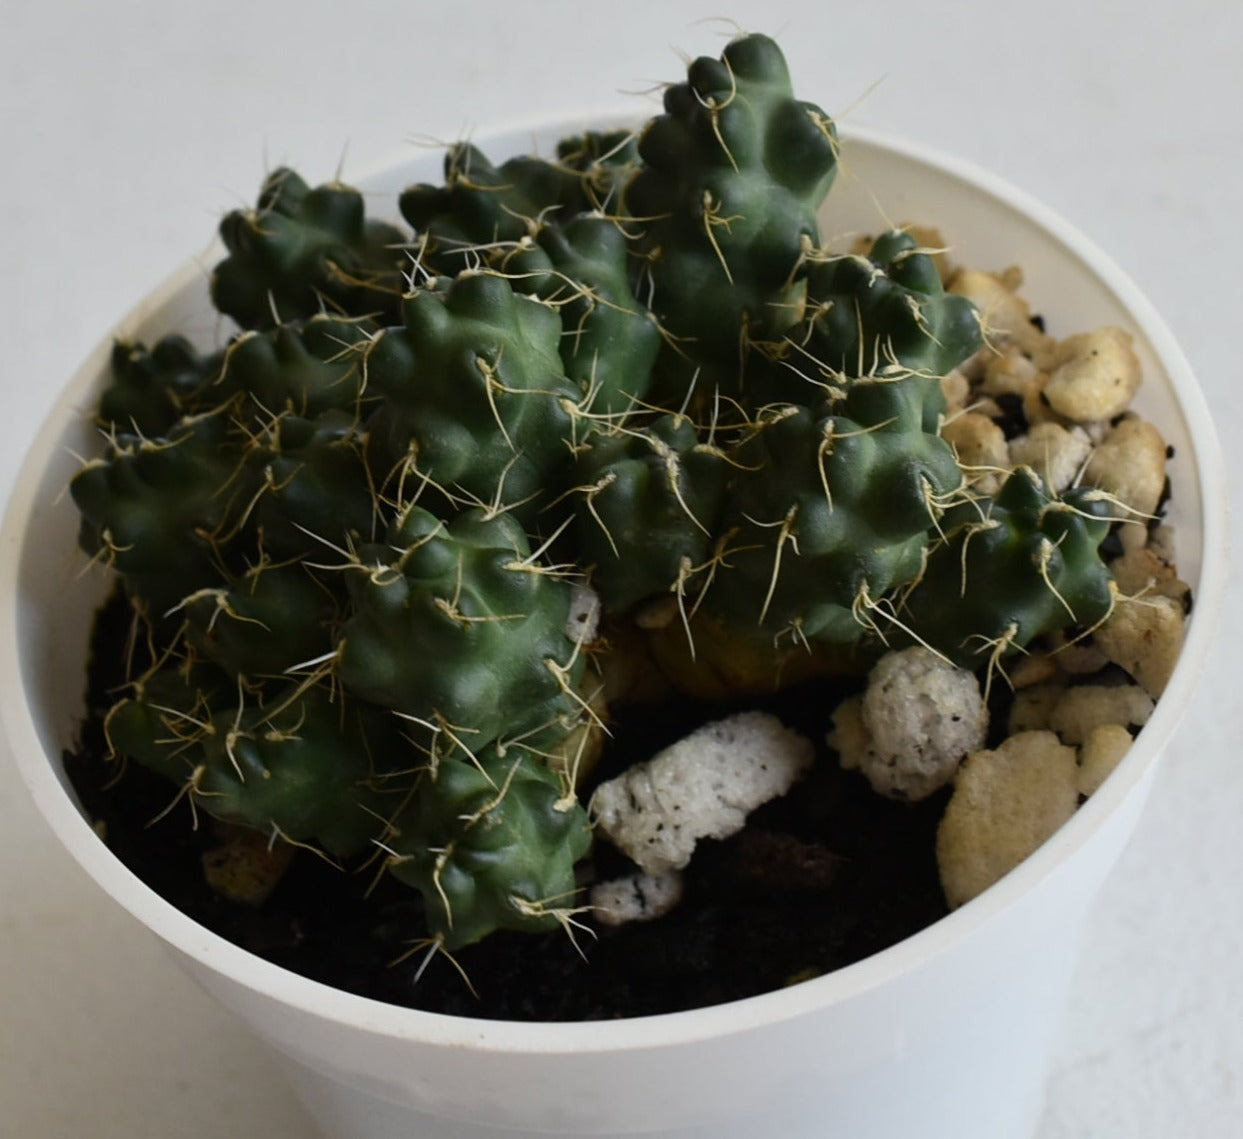 Puna subterranea Live Cactus In 4 Inch